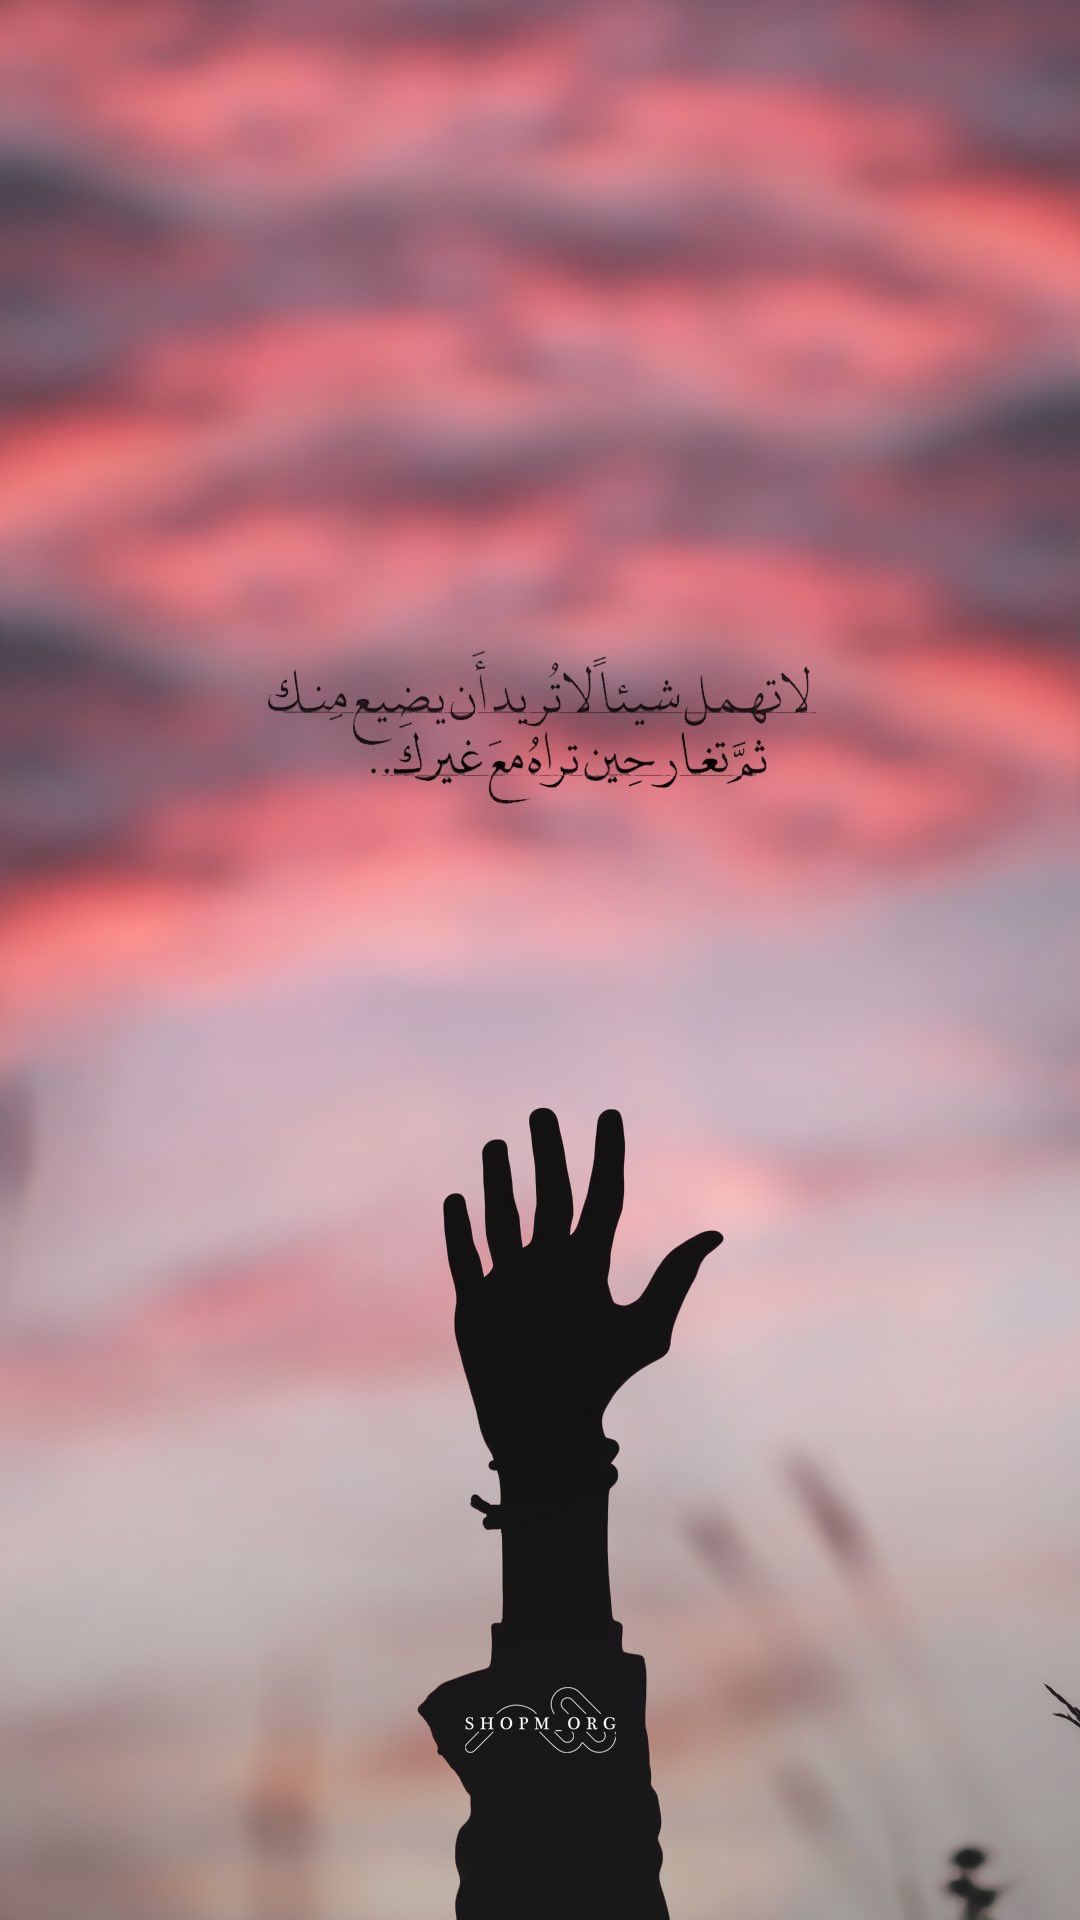 islamische tapete iphone,himmel,hand,rosa,geste,fotografie